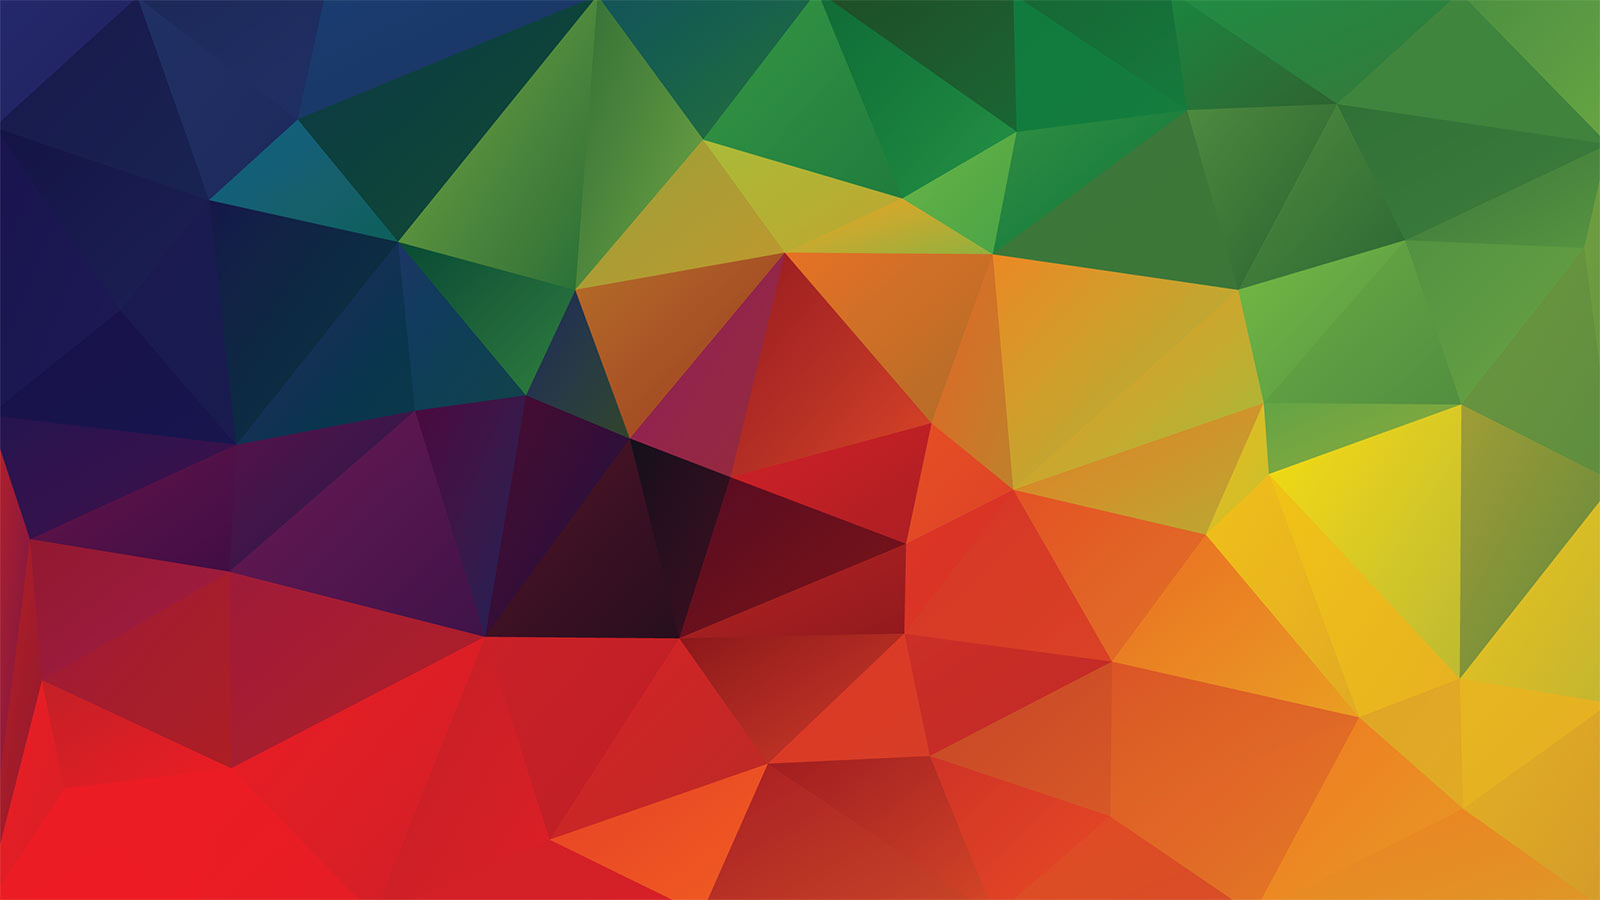 Rainbow colored polygon graphic